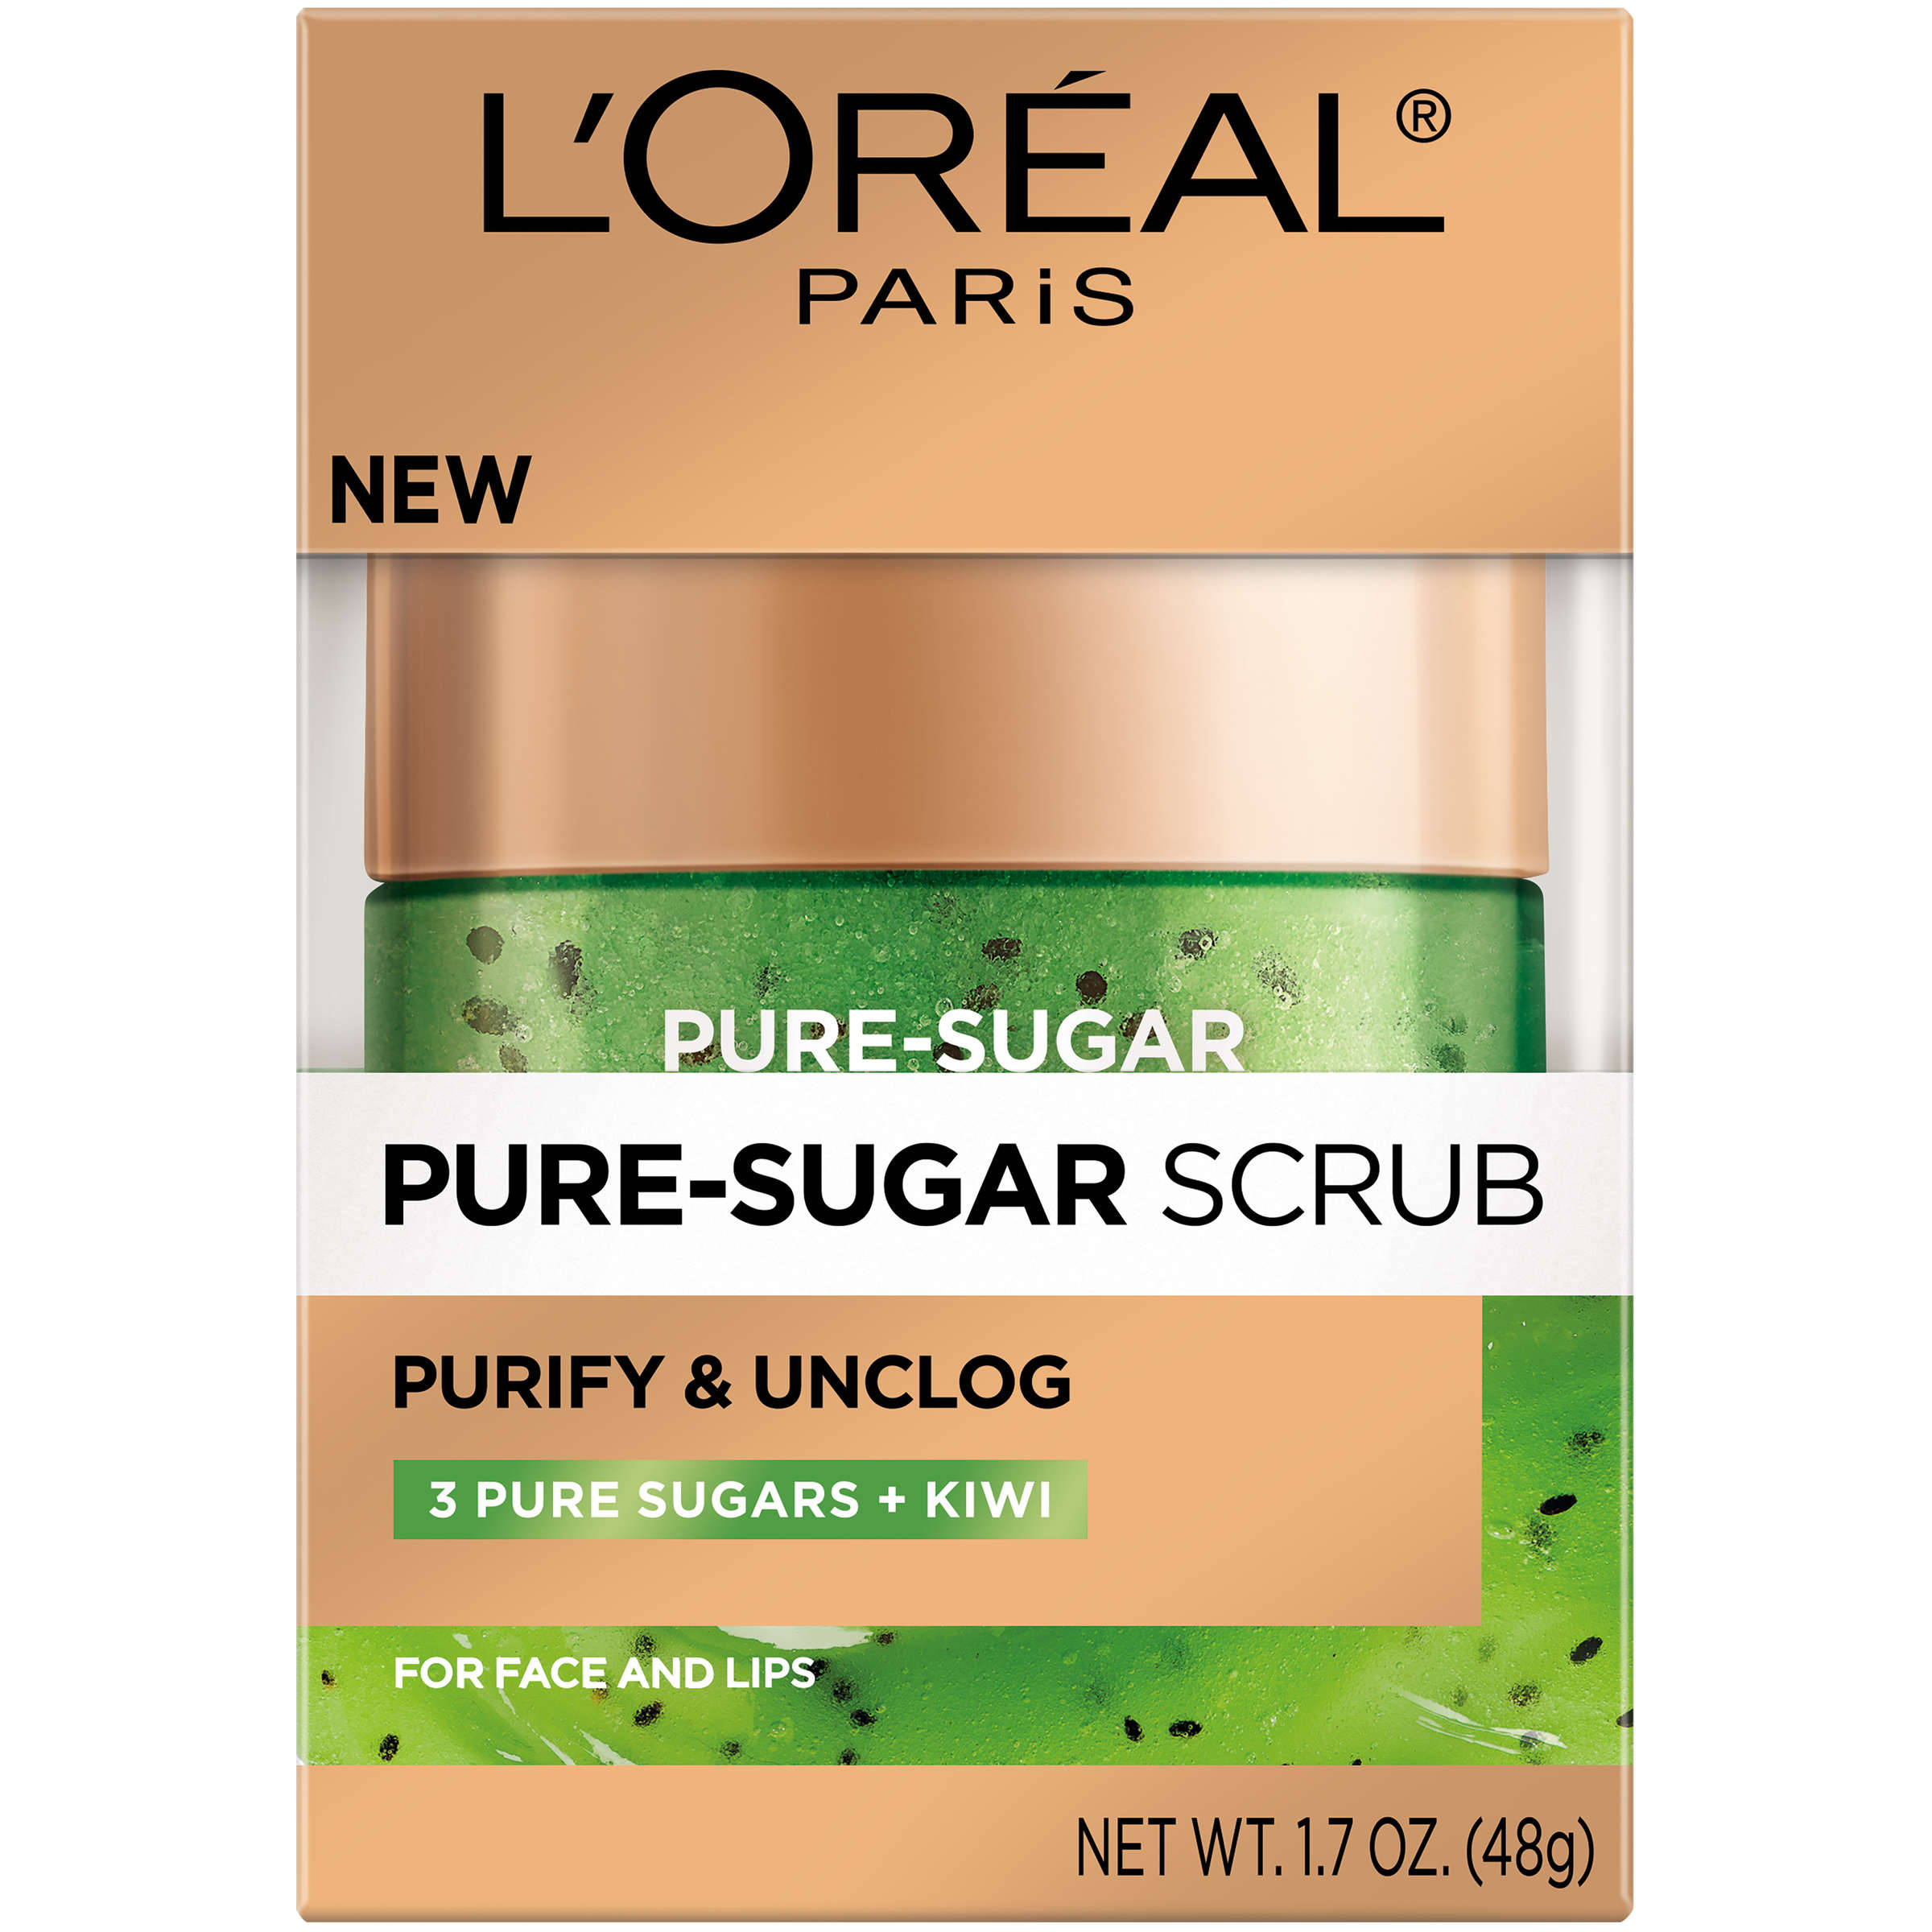 L'Oreal Paris Pure Sugar Scrub Purify & Unclog, 1.7 oz. - image 5 of 6